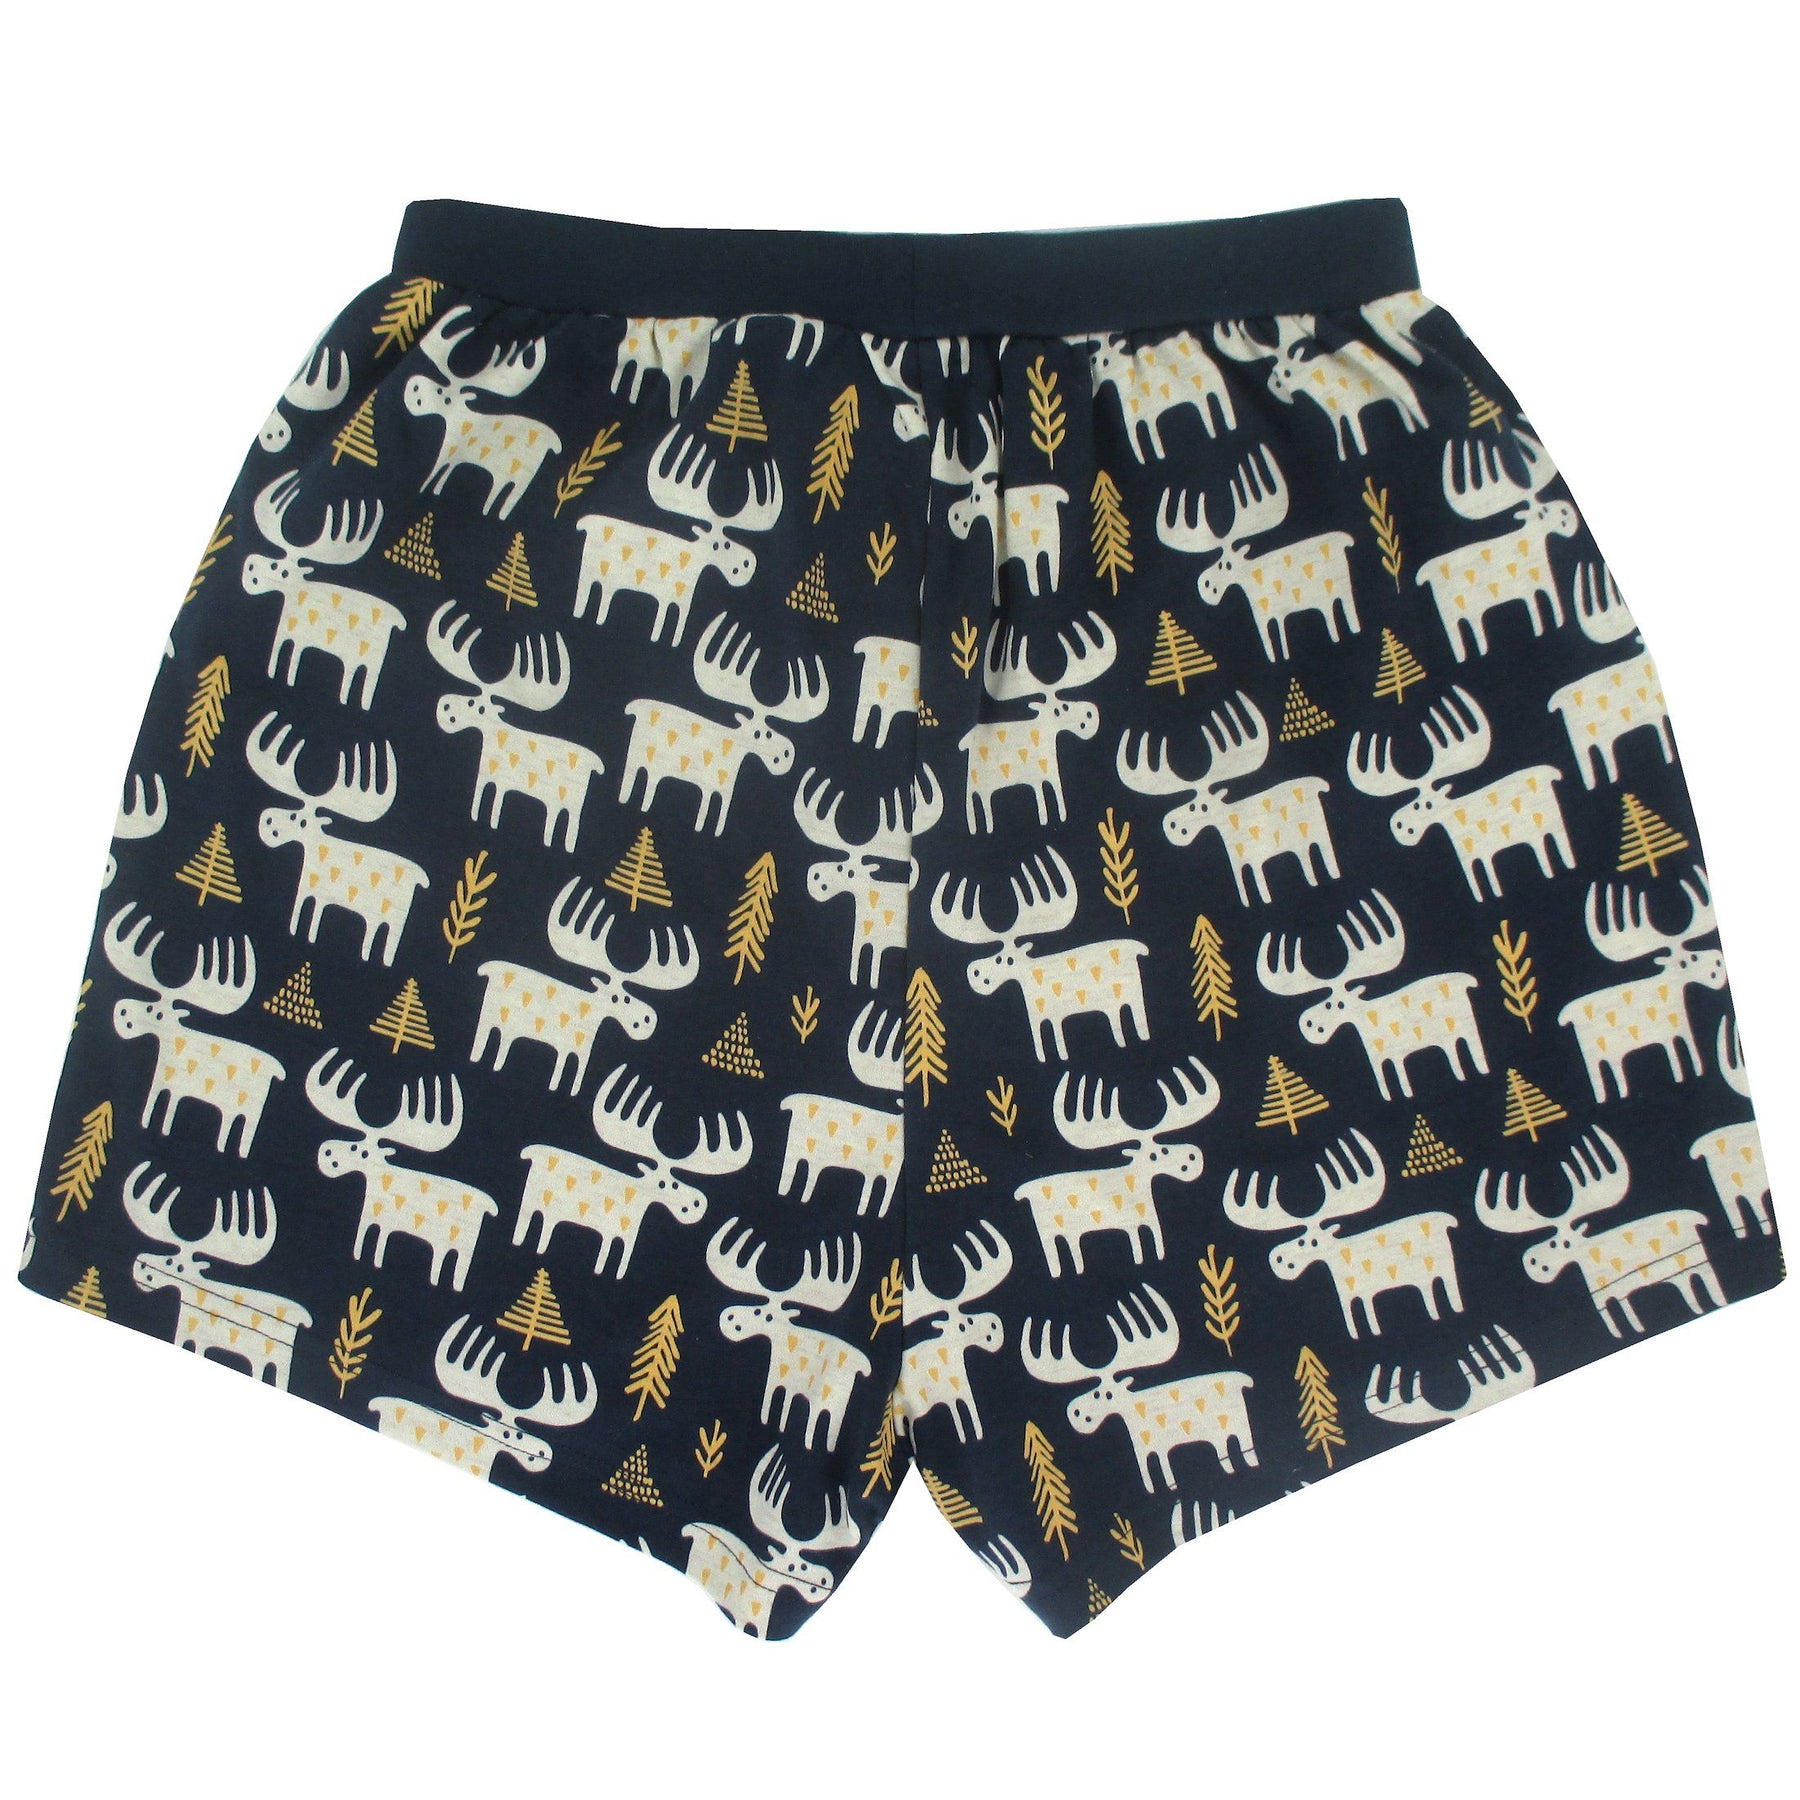 Outdoorsy Moose Underwear. Buy Men's Moose Patterned Boxer Shorts Here ...